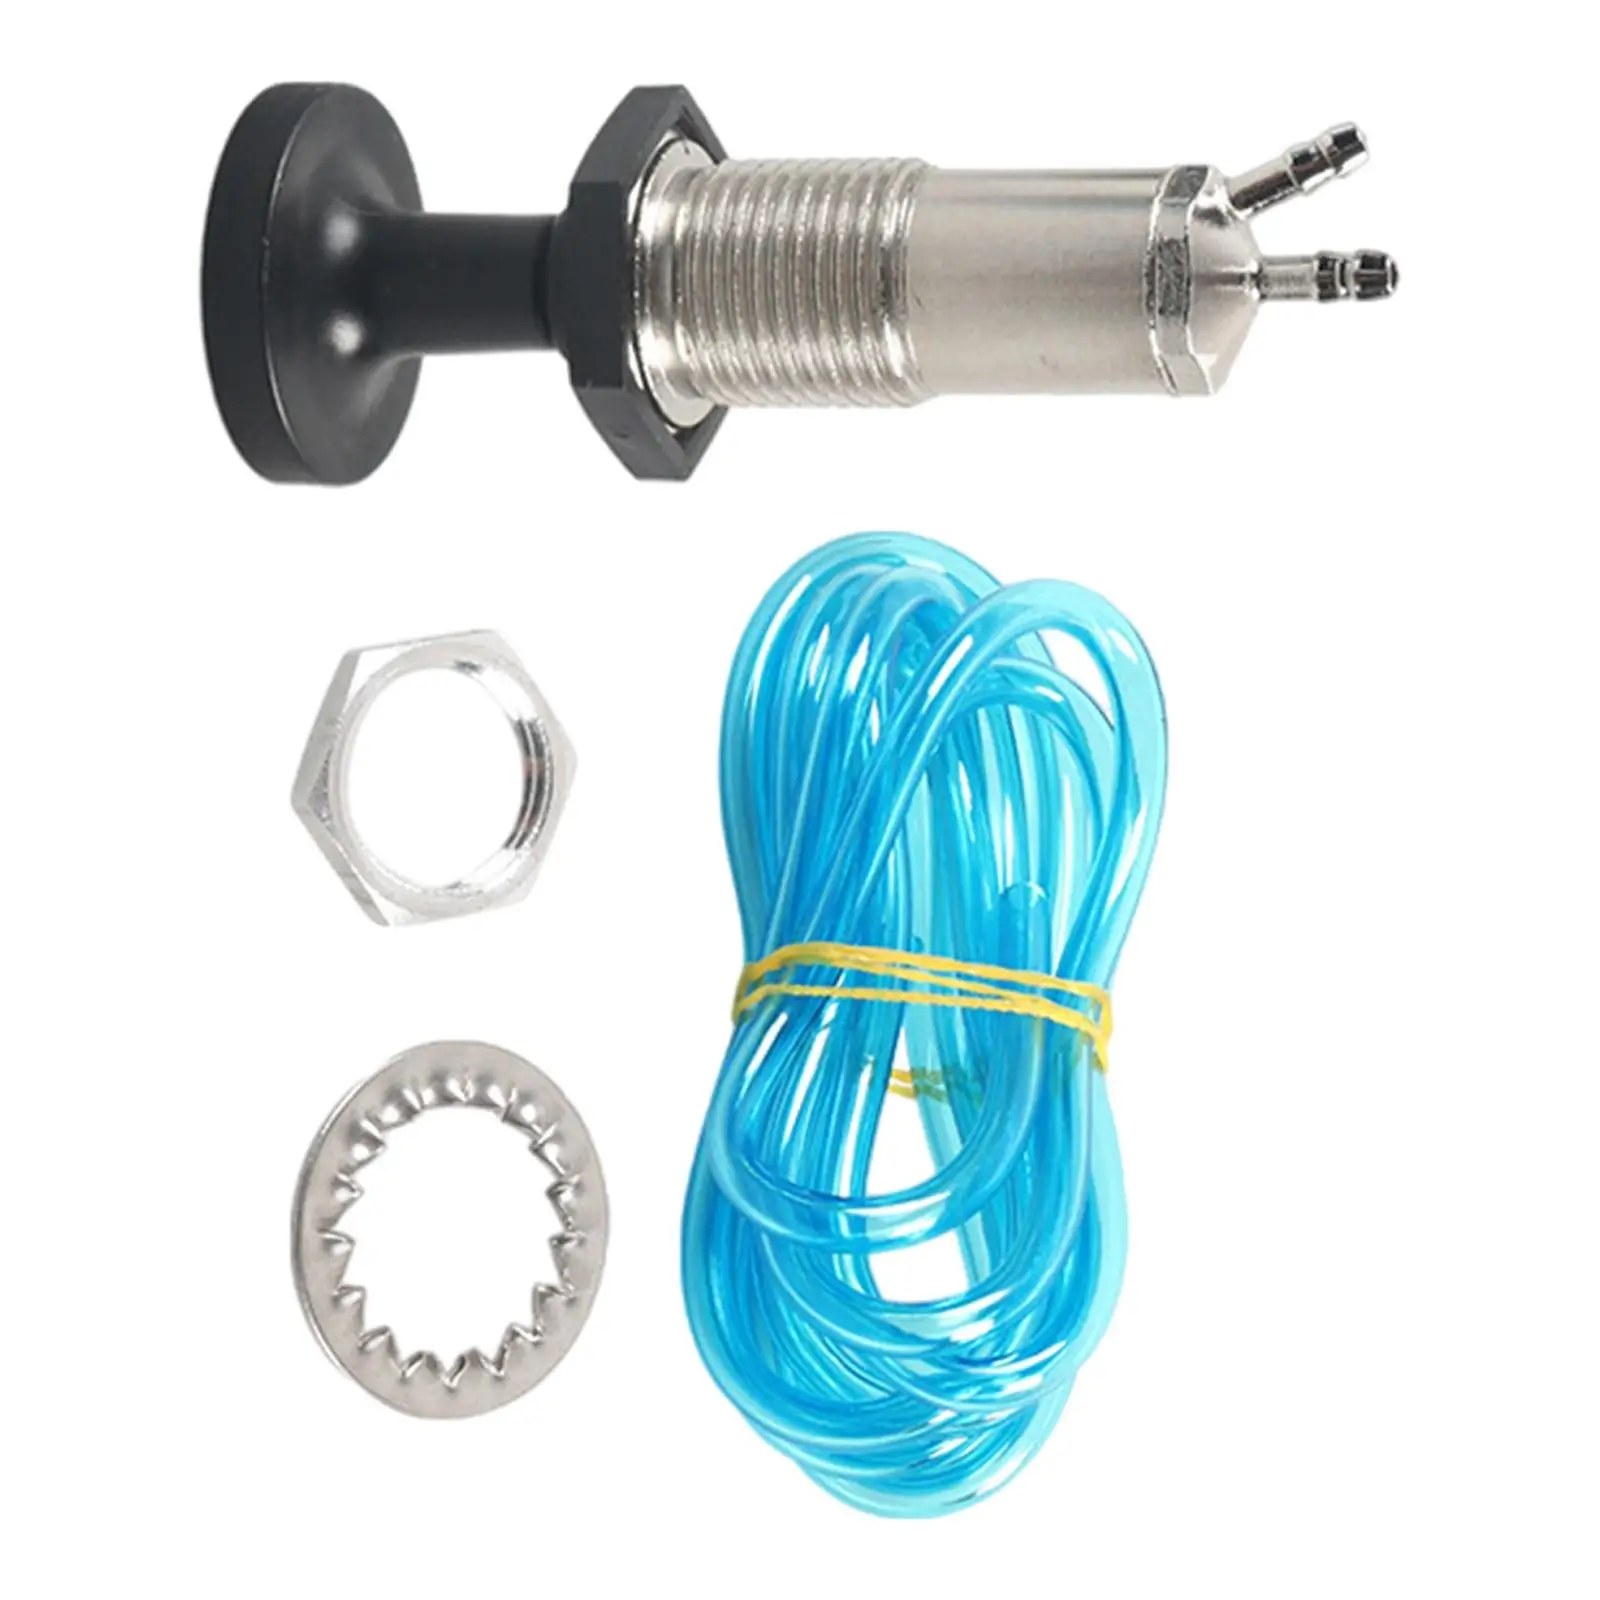 Fuel Primer Kit Plunger Pump Suitable for Snowmobile Accessories